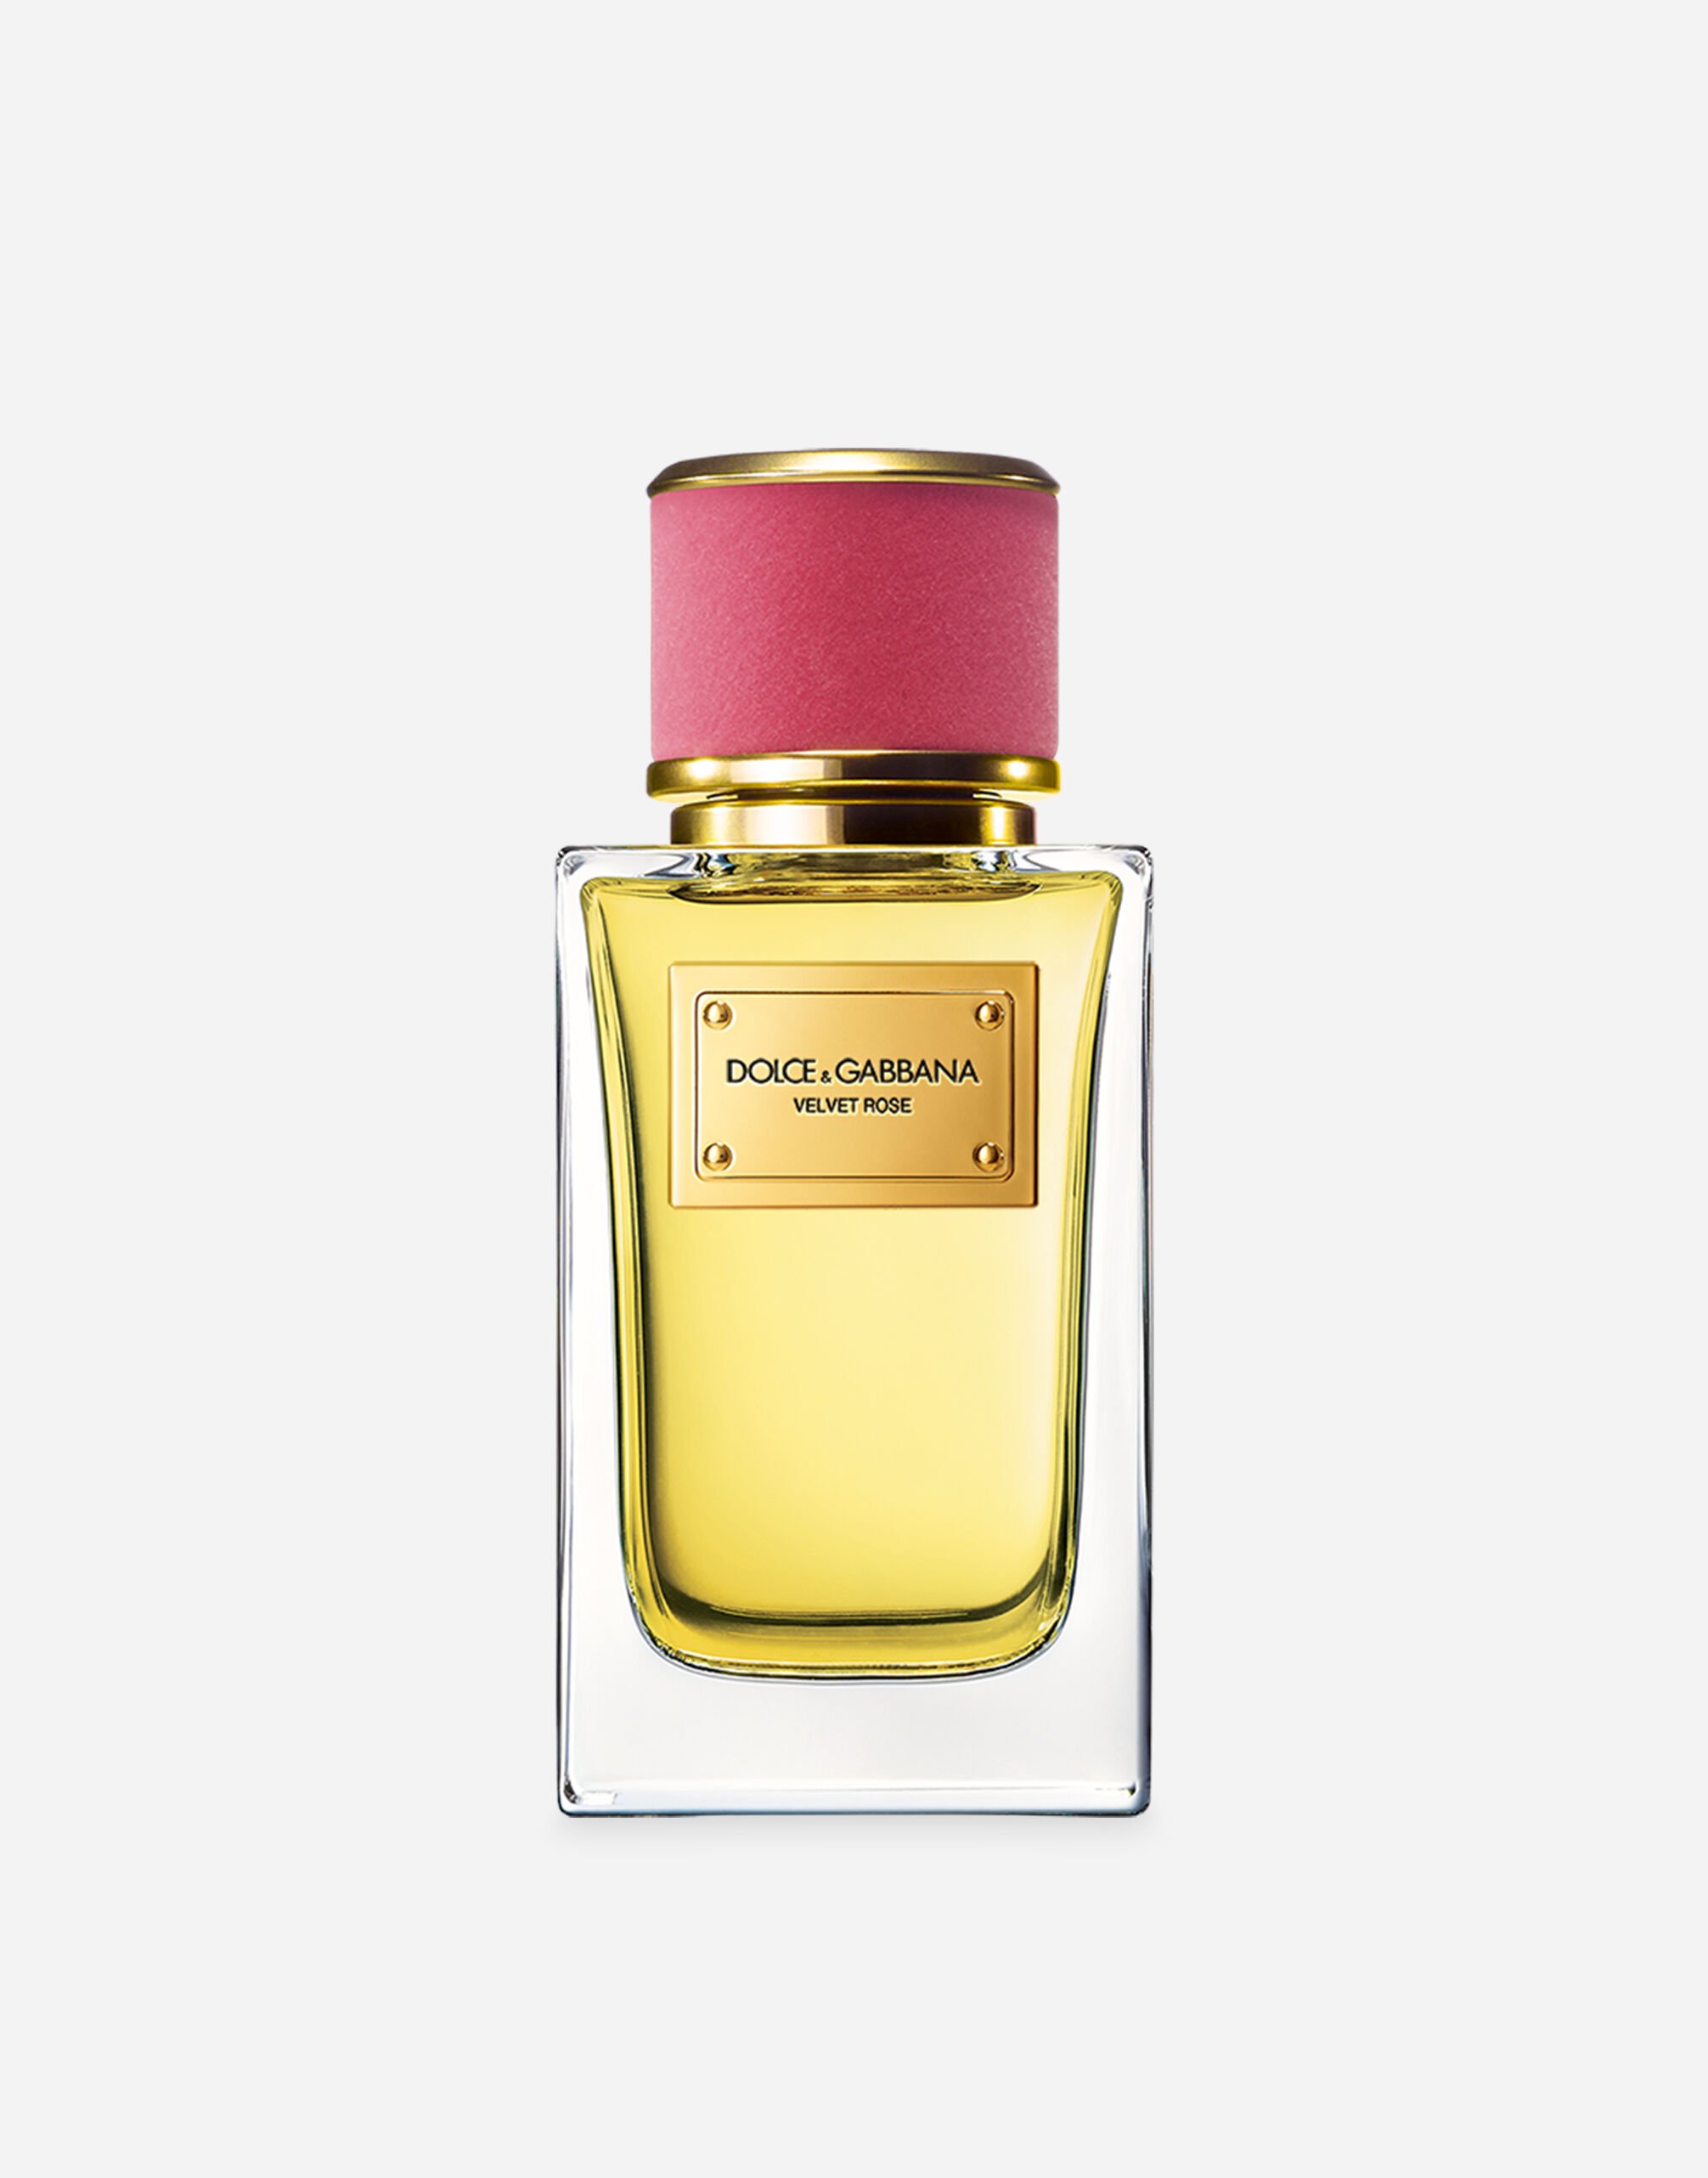 Dolce & Gabbana Velvet Rose Eau de Parfum - VP6975VP243